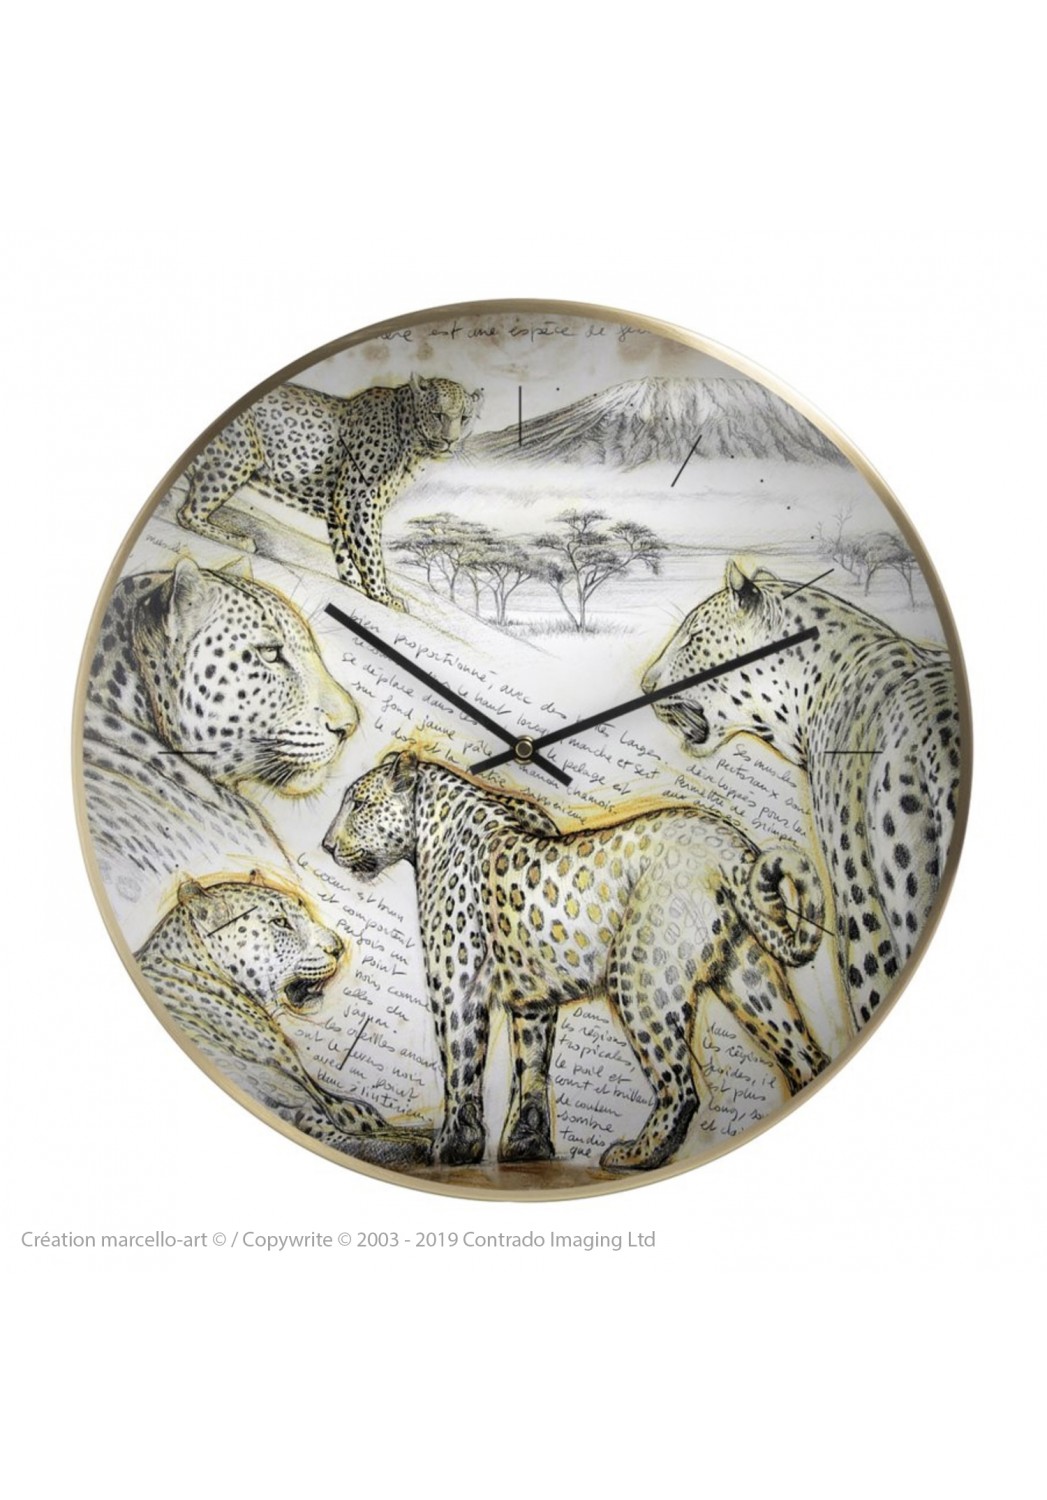 Marcello-art: Decoration accessoiries Wall clock 252 Leopard